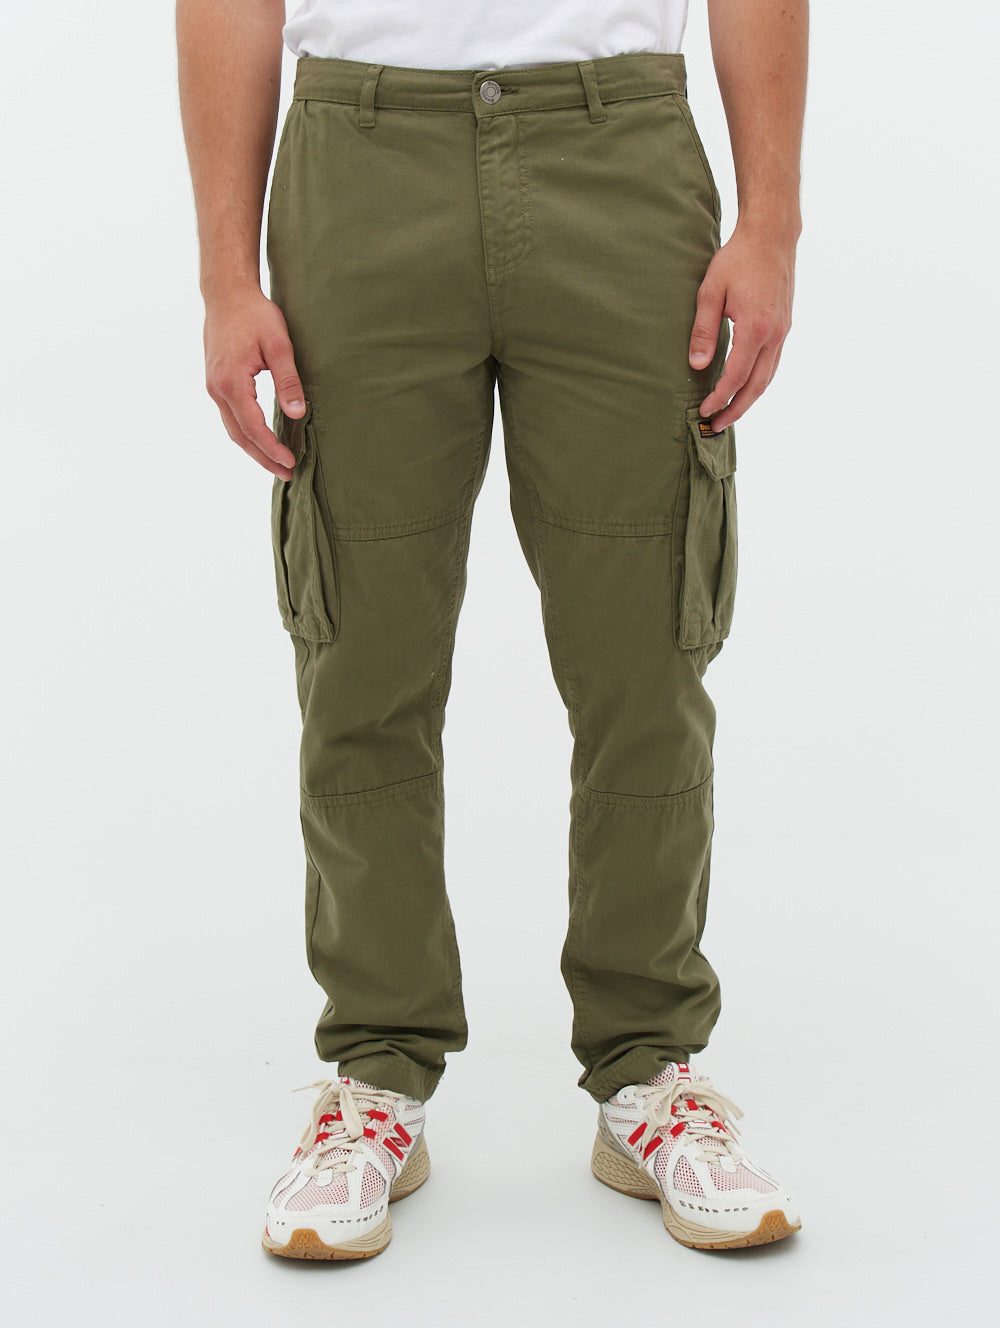 Twill Cargo Pants - Dark khaki green - Ladies